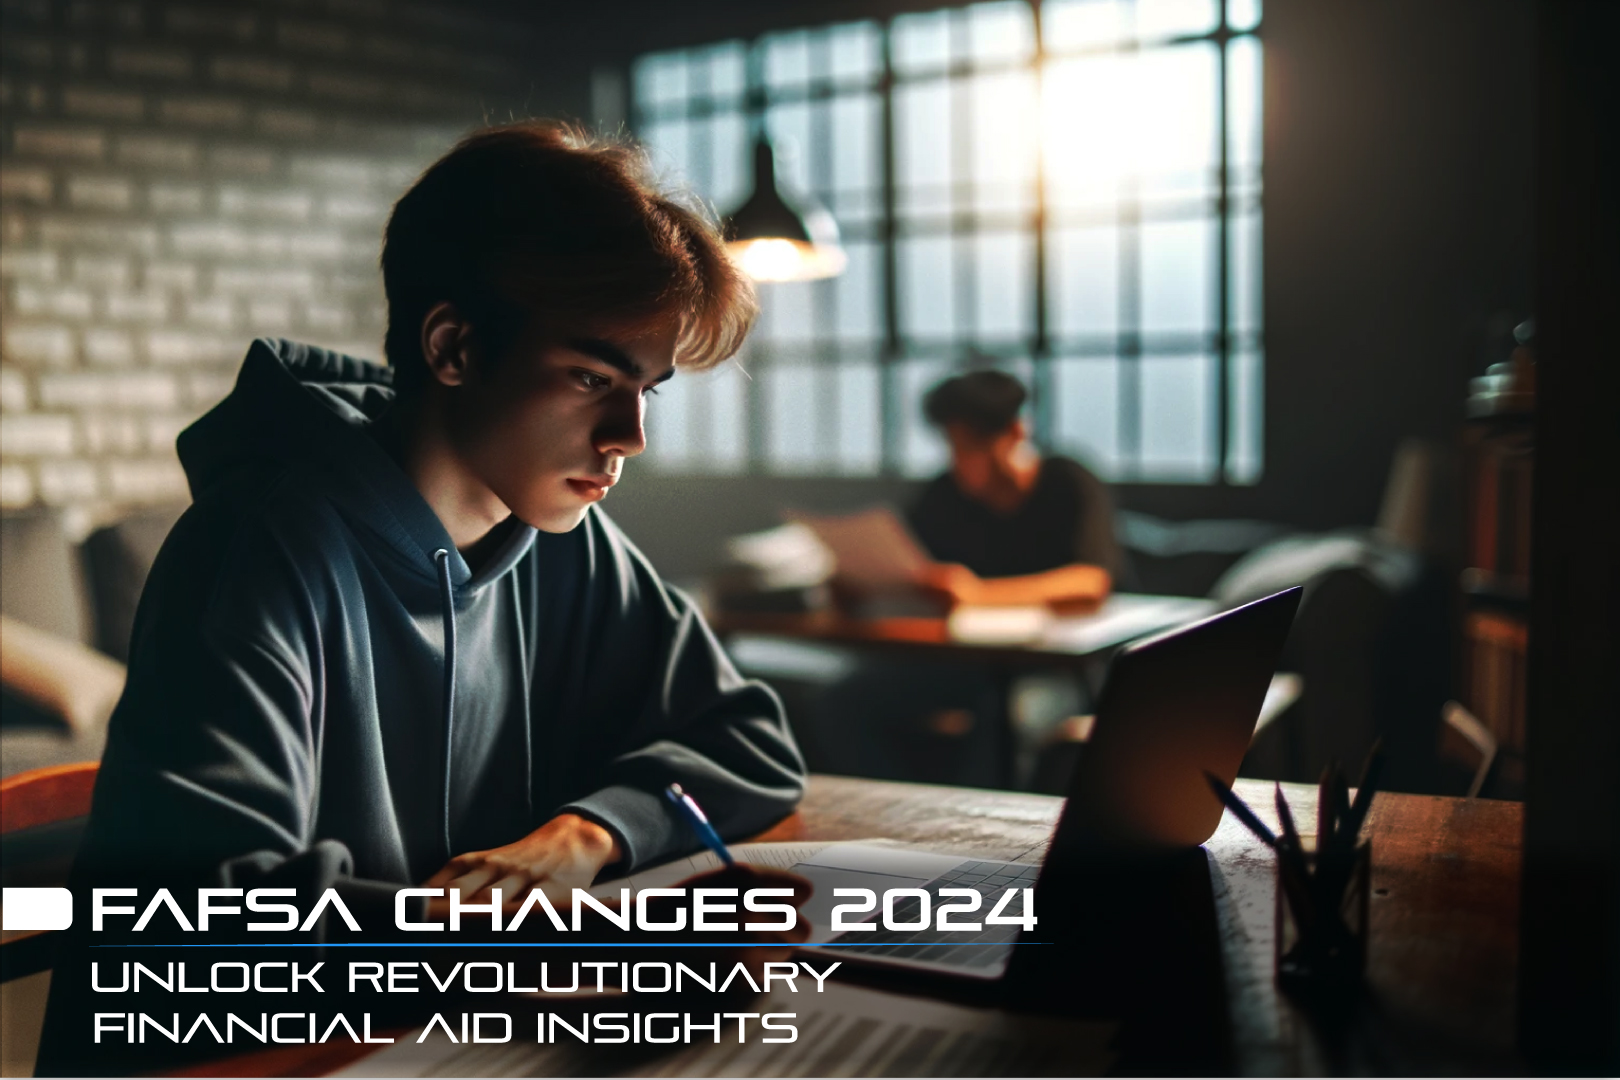 FAFSA Changes 2024